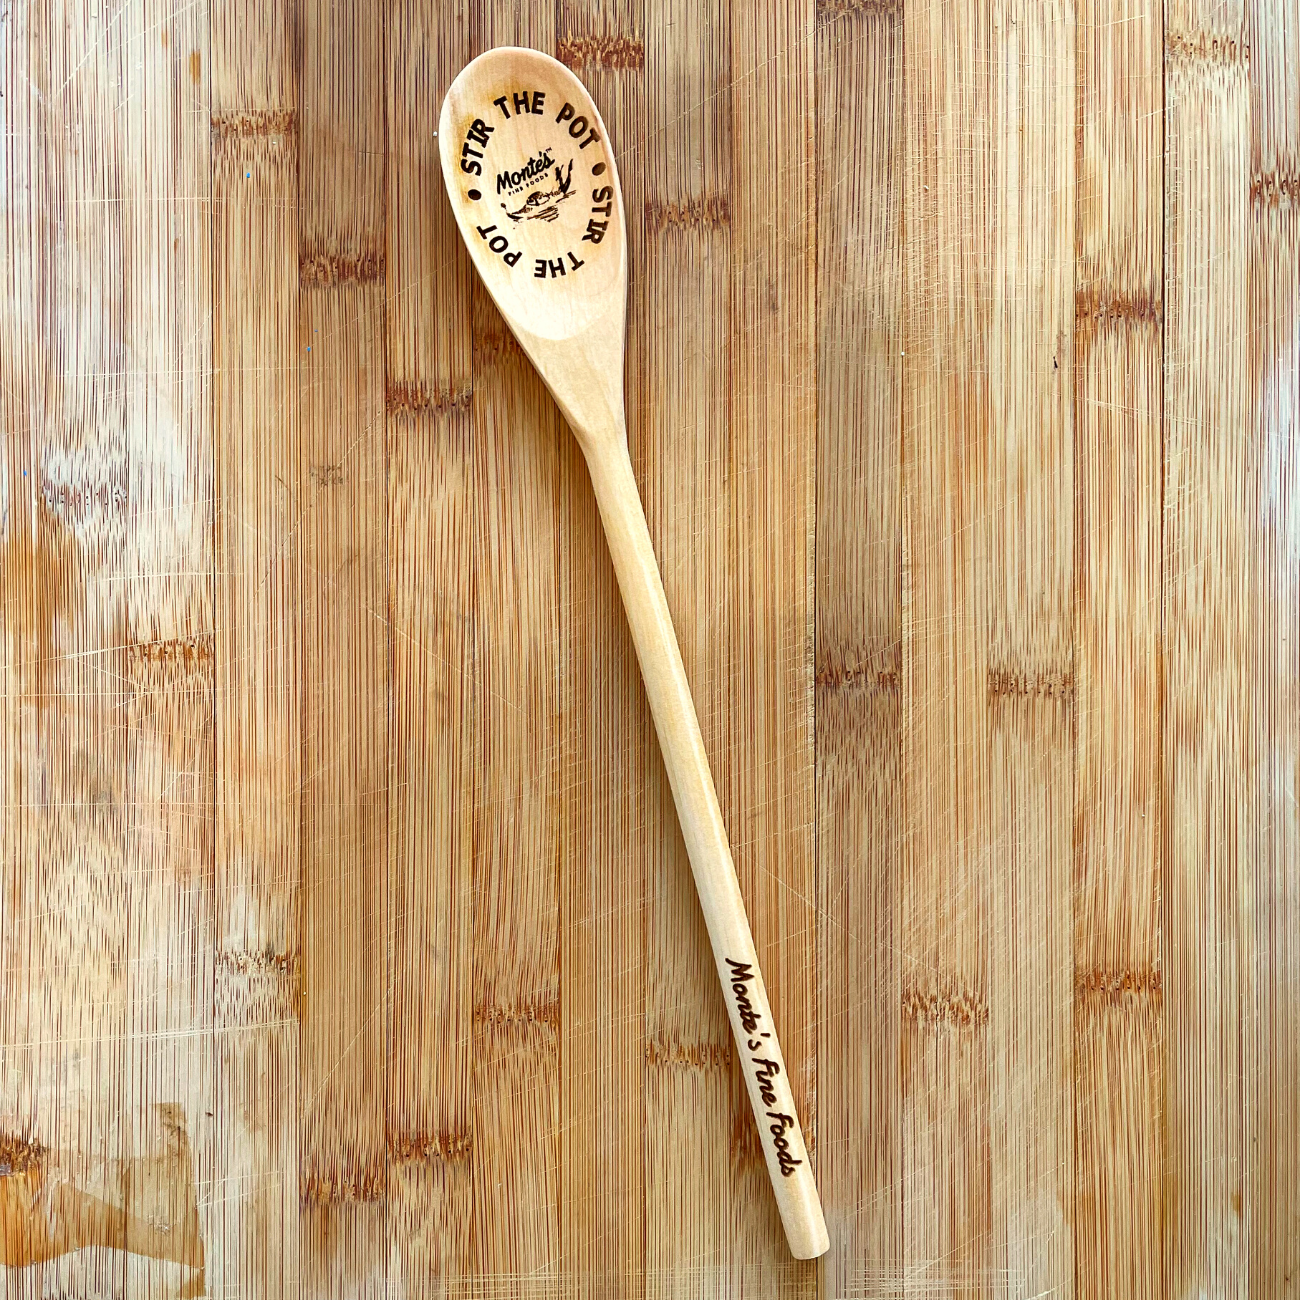 'Stir the Pot' Wooden Spoon